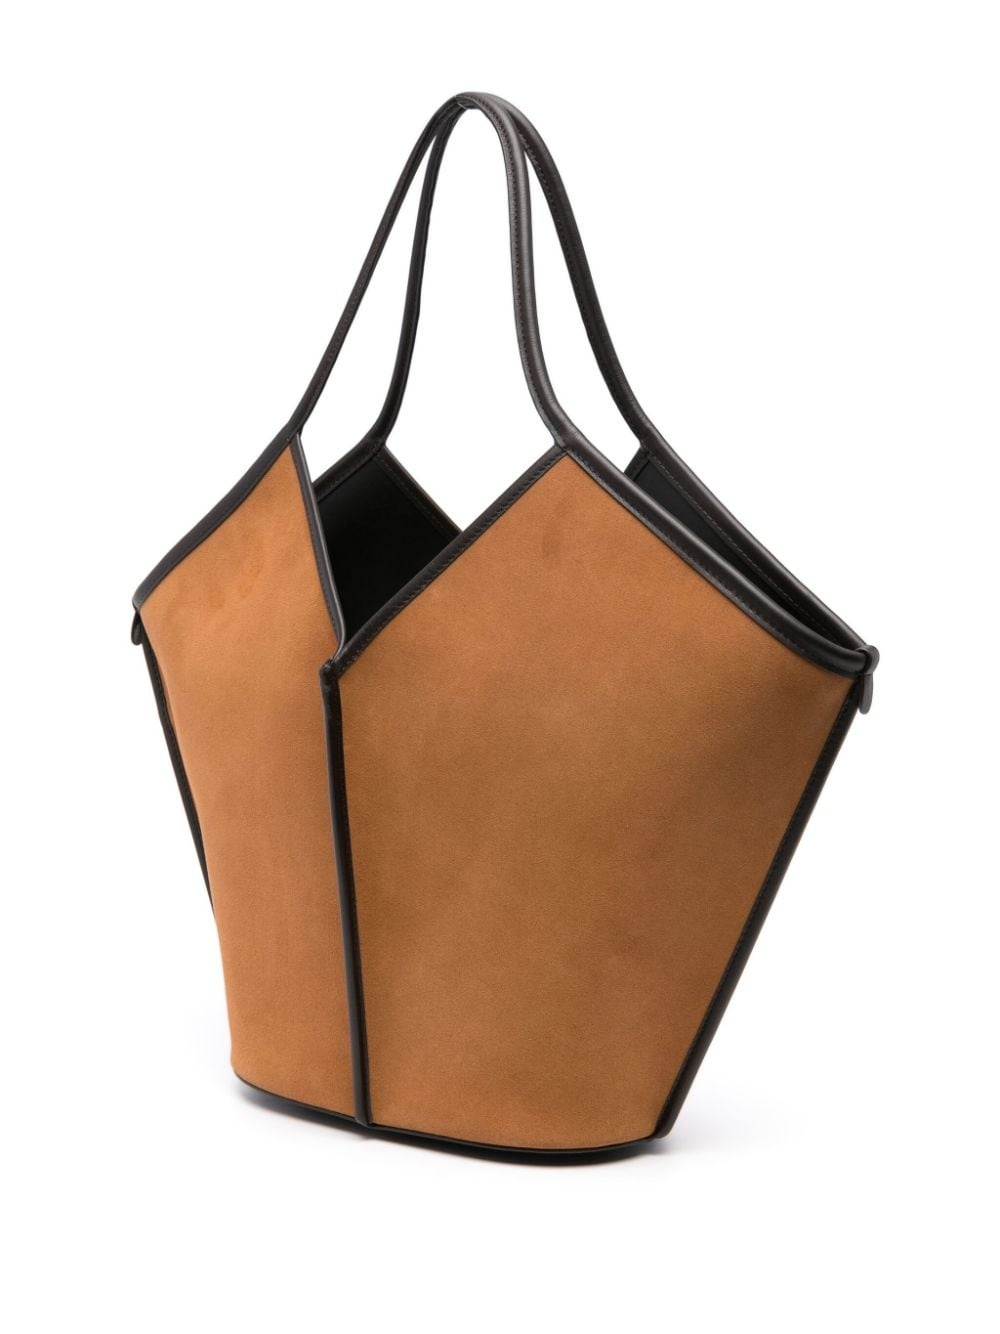 Calella leather tote bag - 3